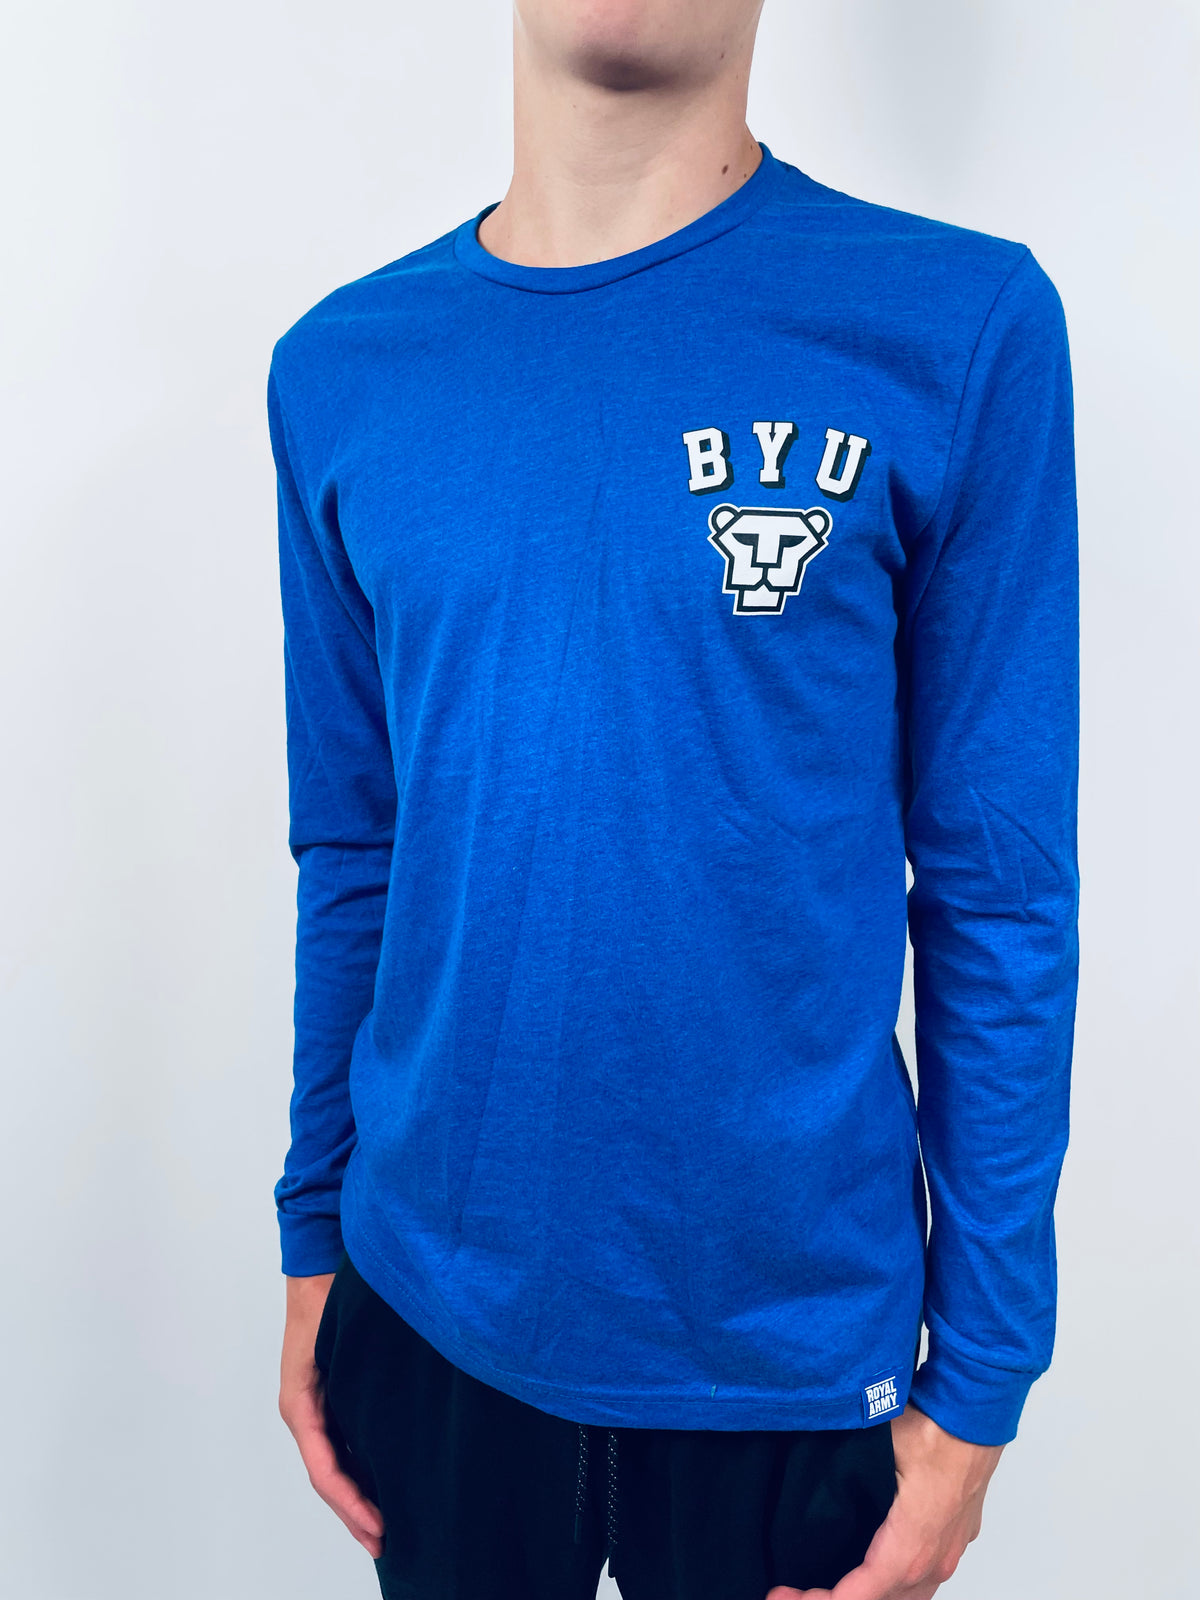 Royal Army Brand BYU Vector Cougar Long Sleeve T-Shirt XL